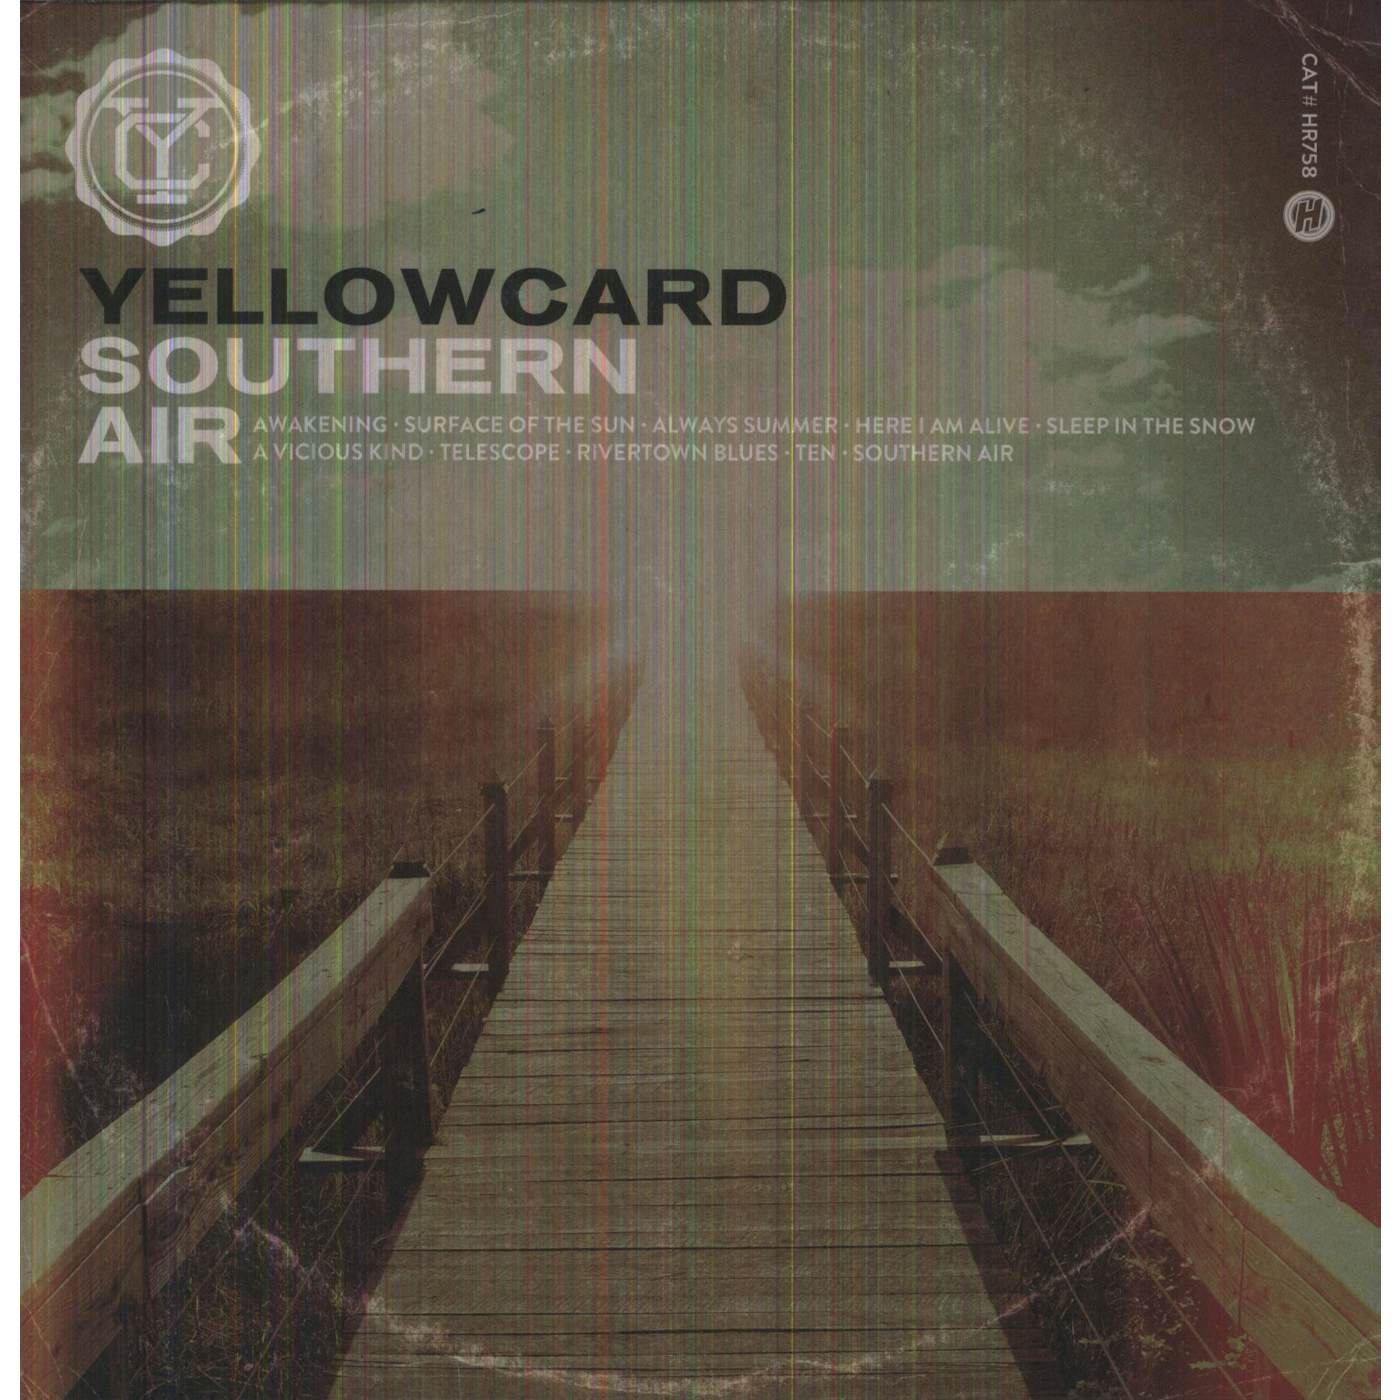 Yellowcard Southern Air Vinyl Record